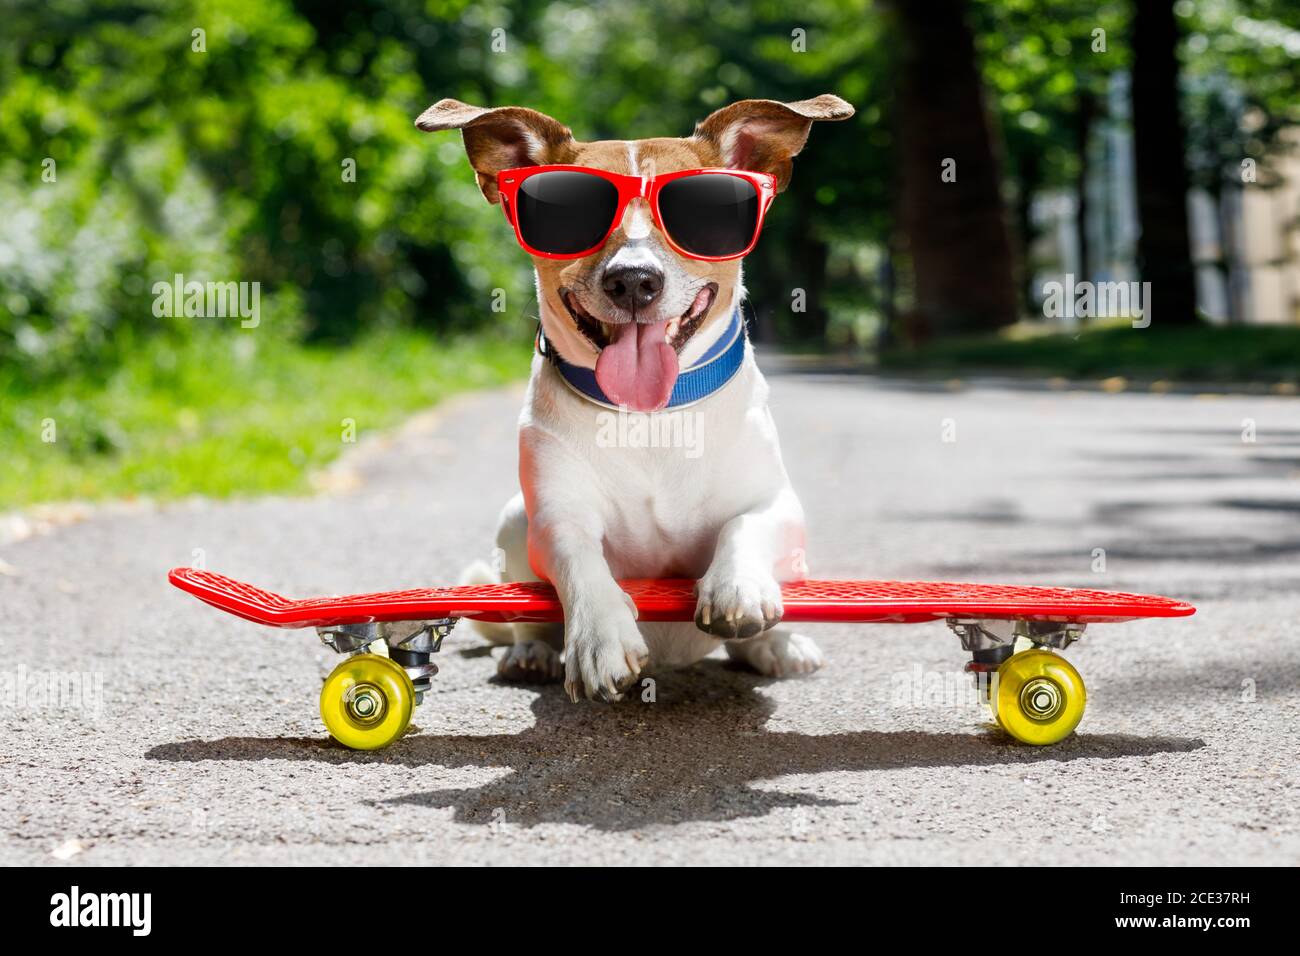 skater dog on skateboard Stock Photo - Alamy